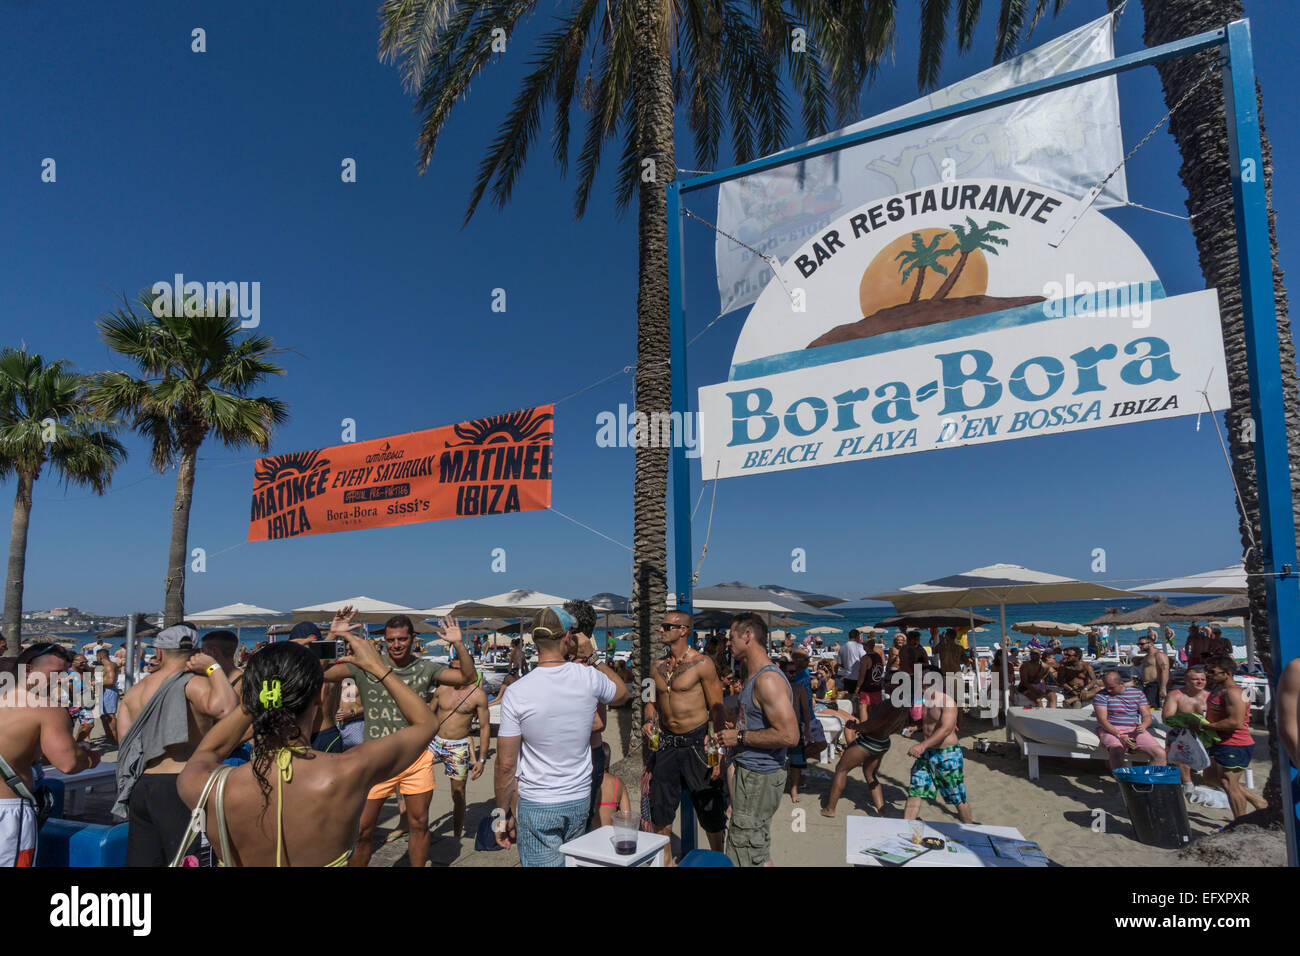 Bora Bora Club Playa den Bossa, Ibiza, Spagna, isole Baleraric Foto Stock